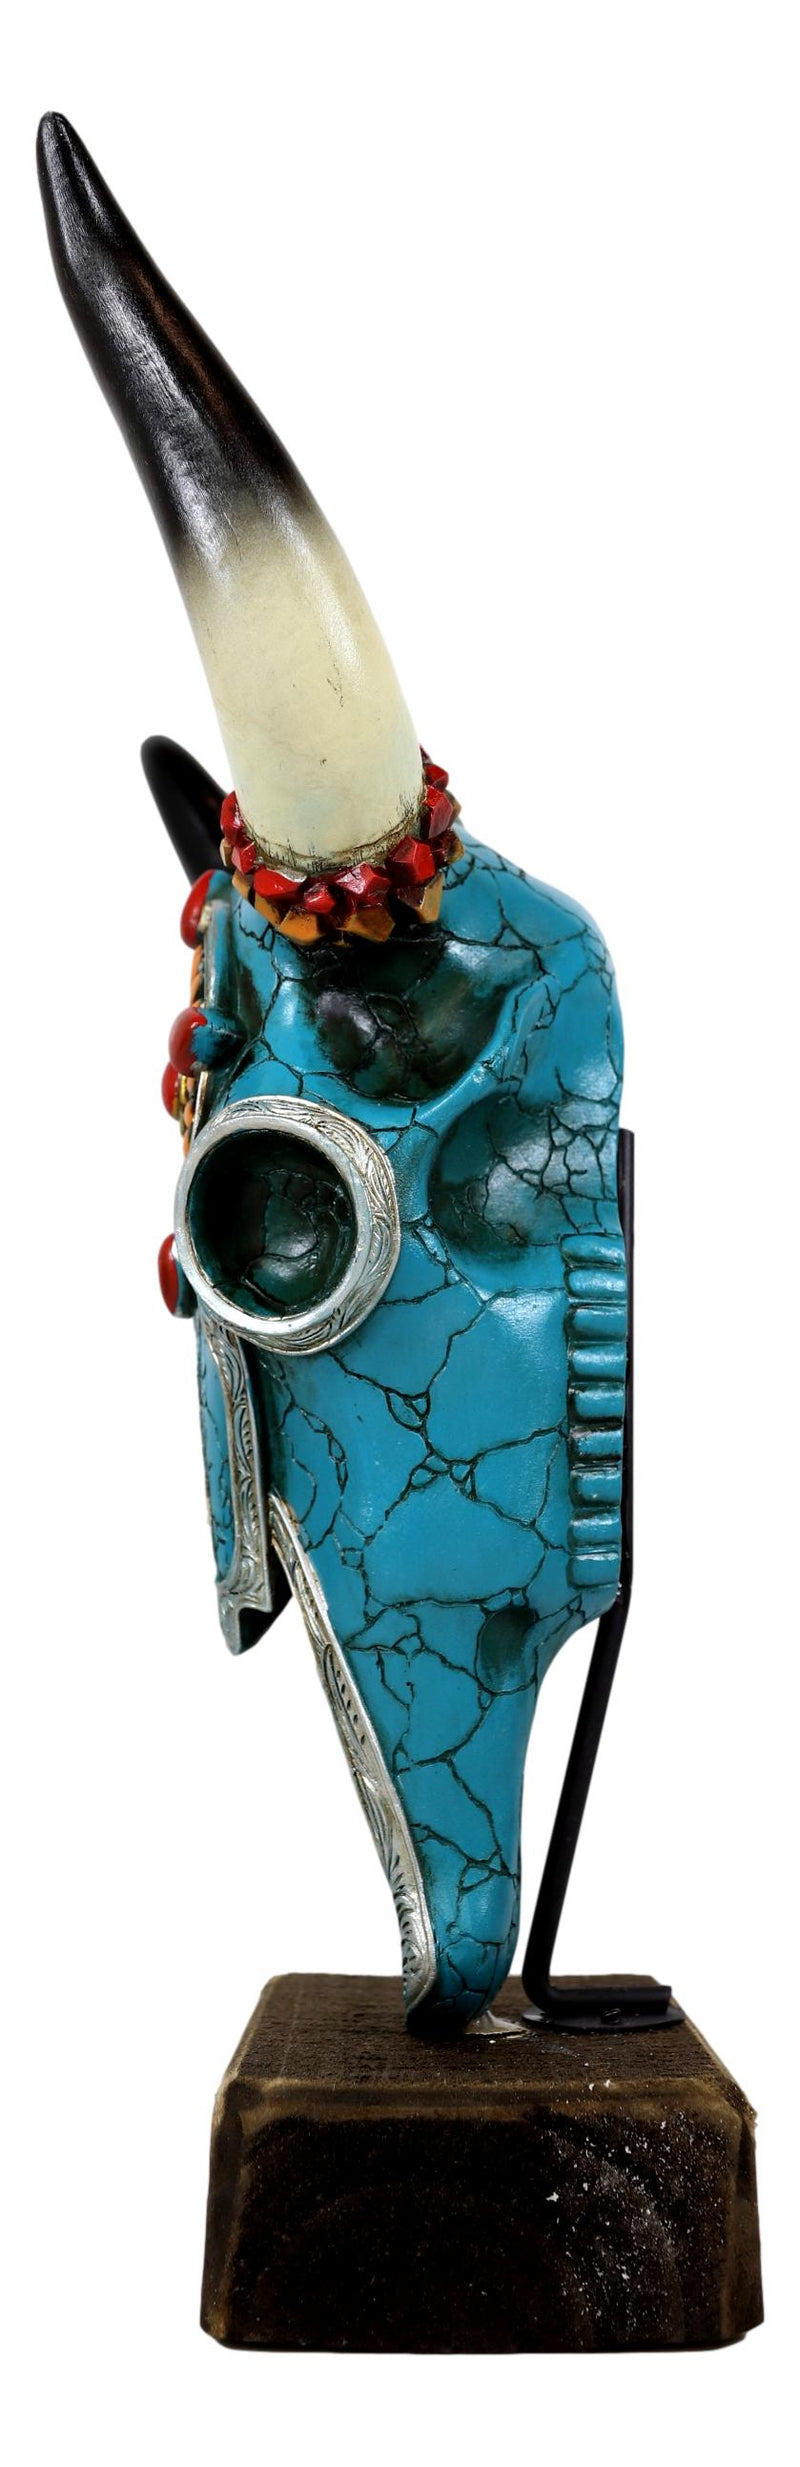 Rustic Western Aztec Mosaic Turquoise Cow Steer Bull Skull Desktop Sculpture